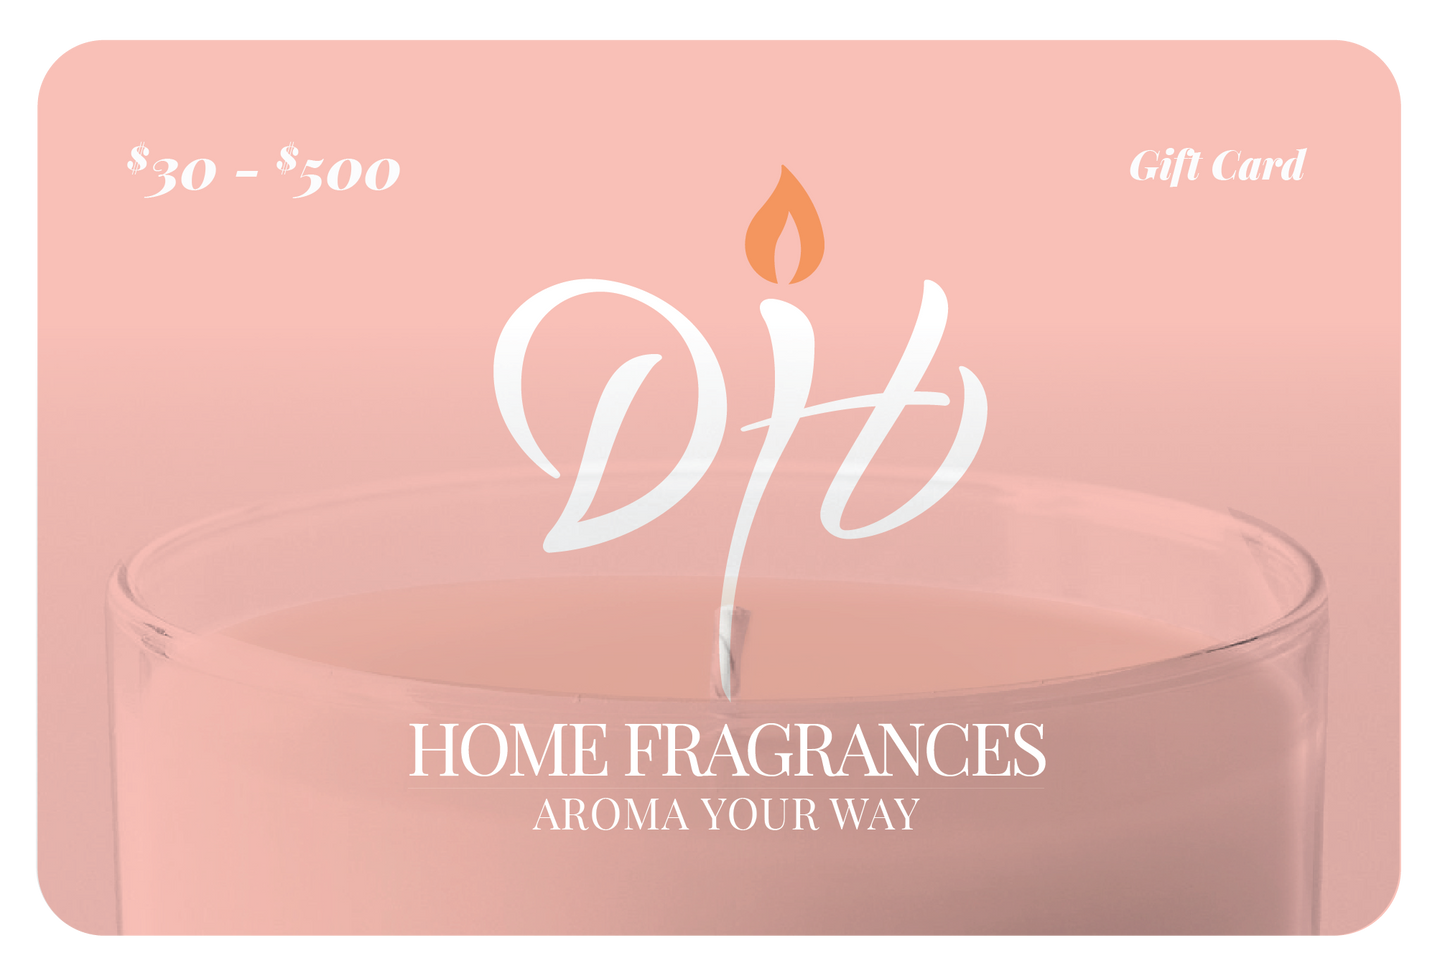 D.H. Home Fragrance Gift Card